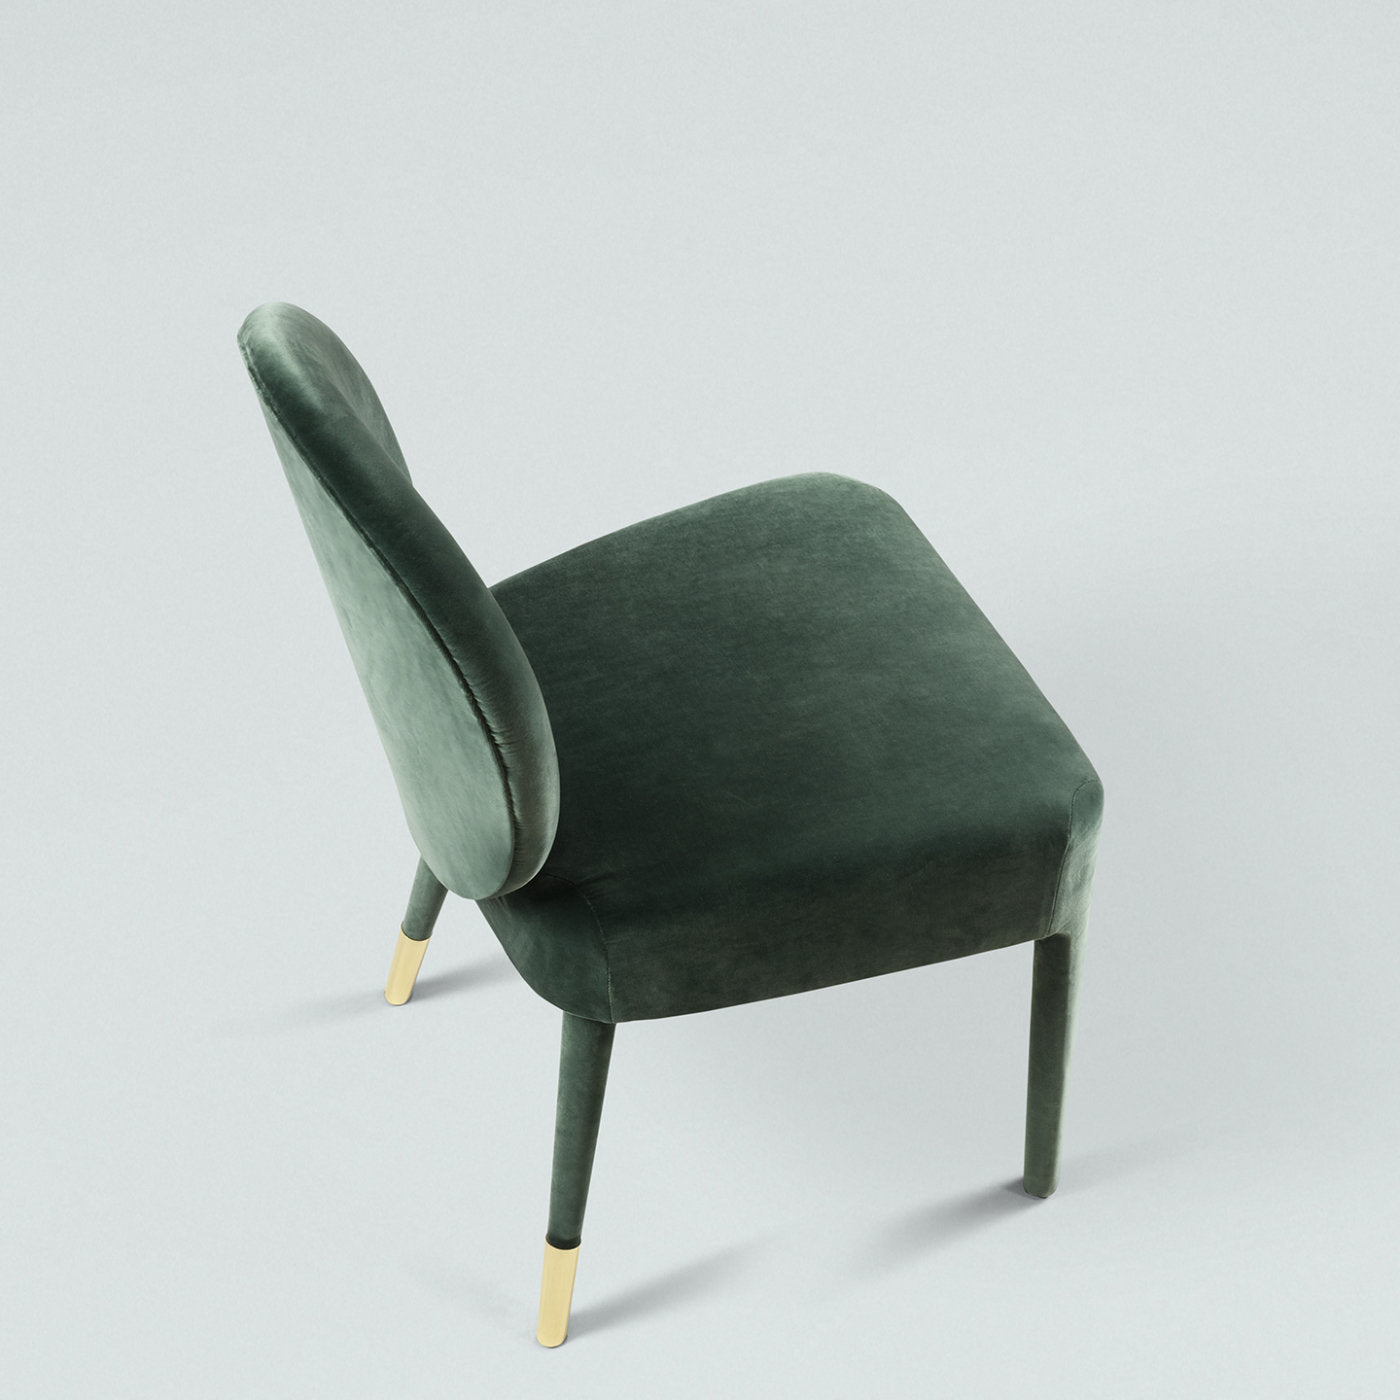 Sofia Green Chair - Alternative view 2